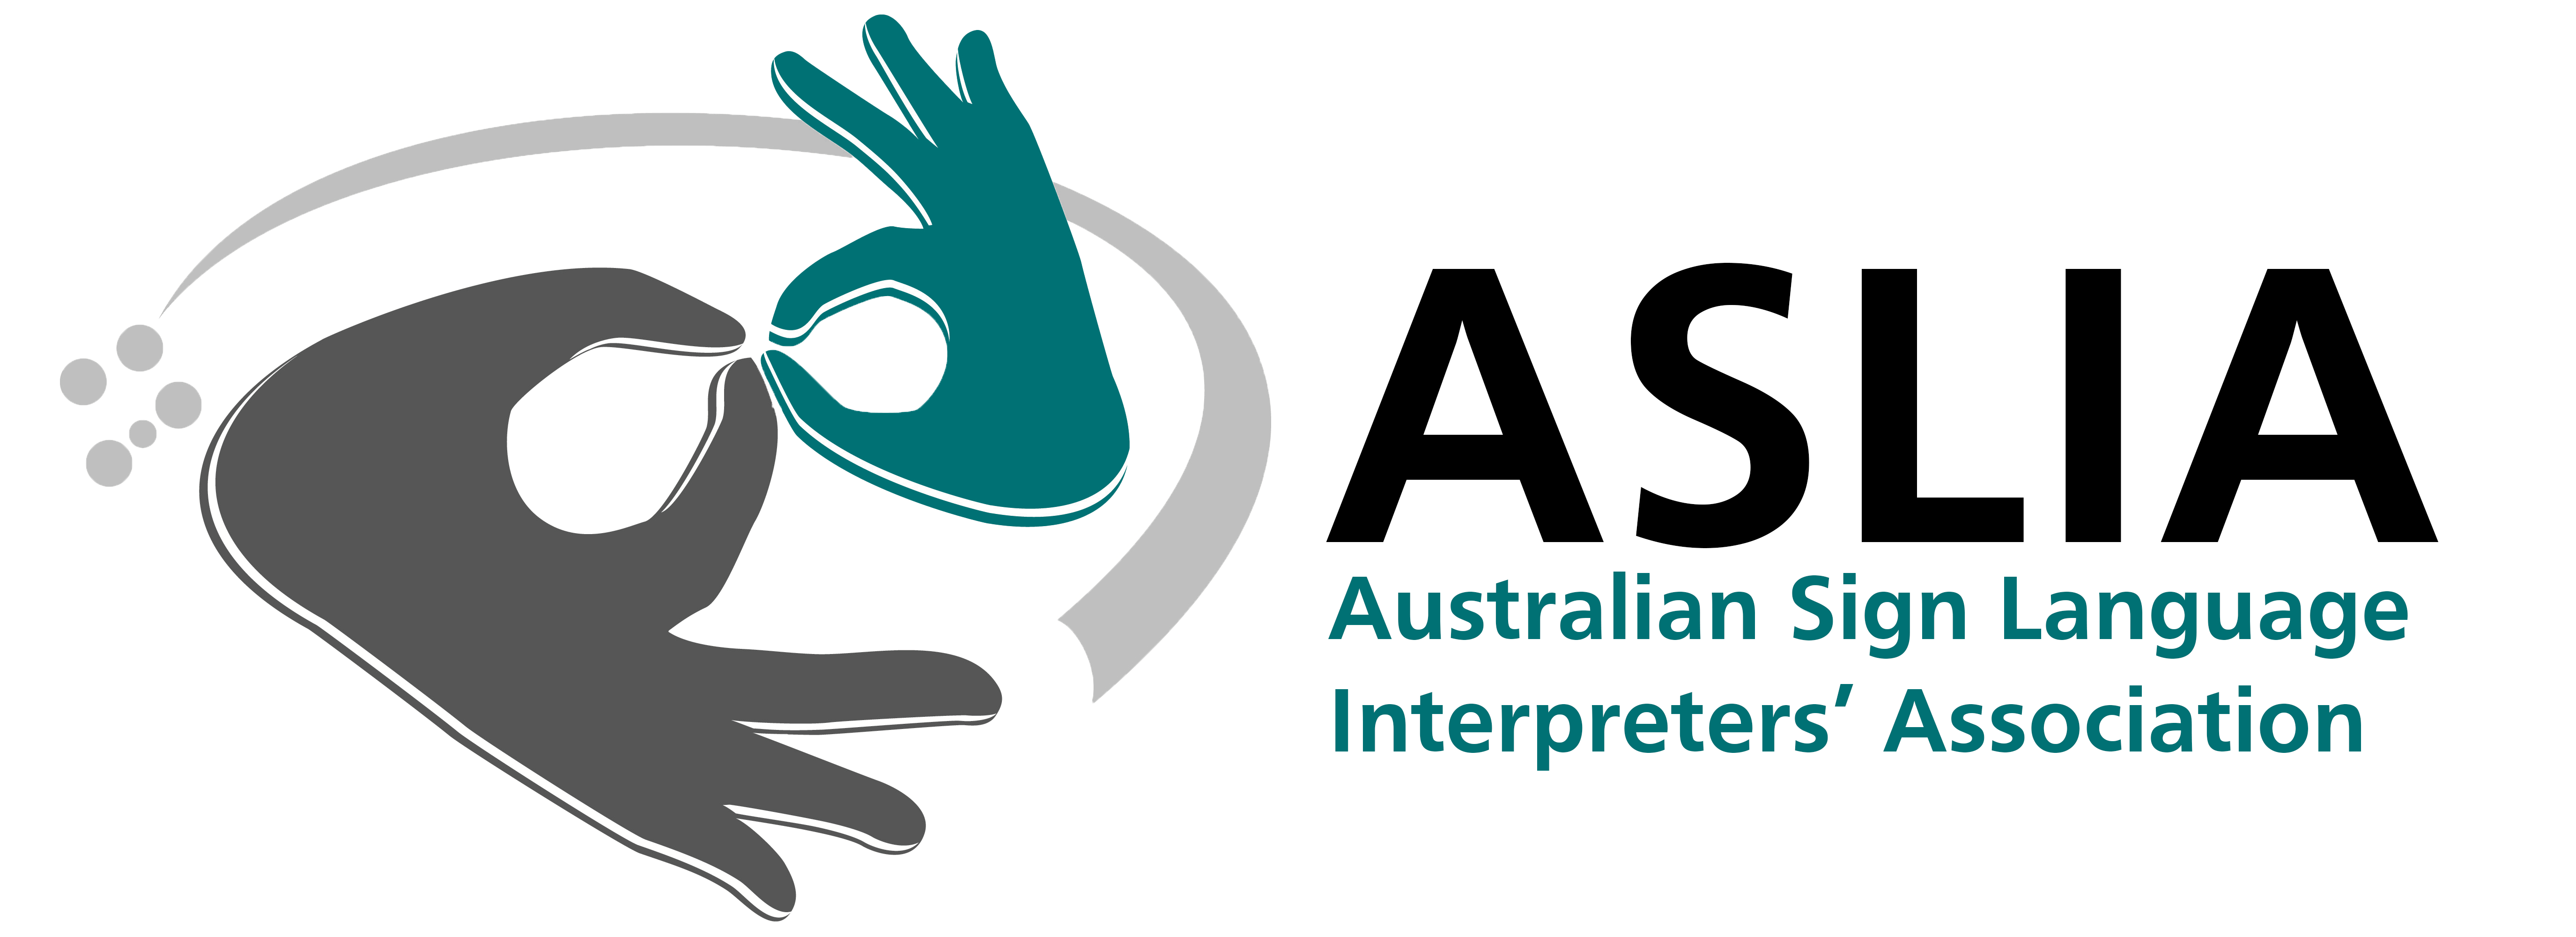 Australia Sign Language Interpreters Association logo